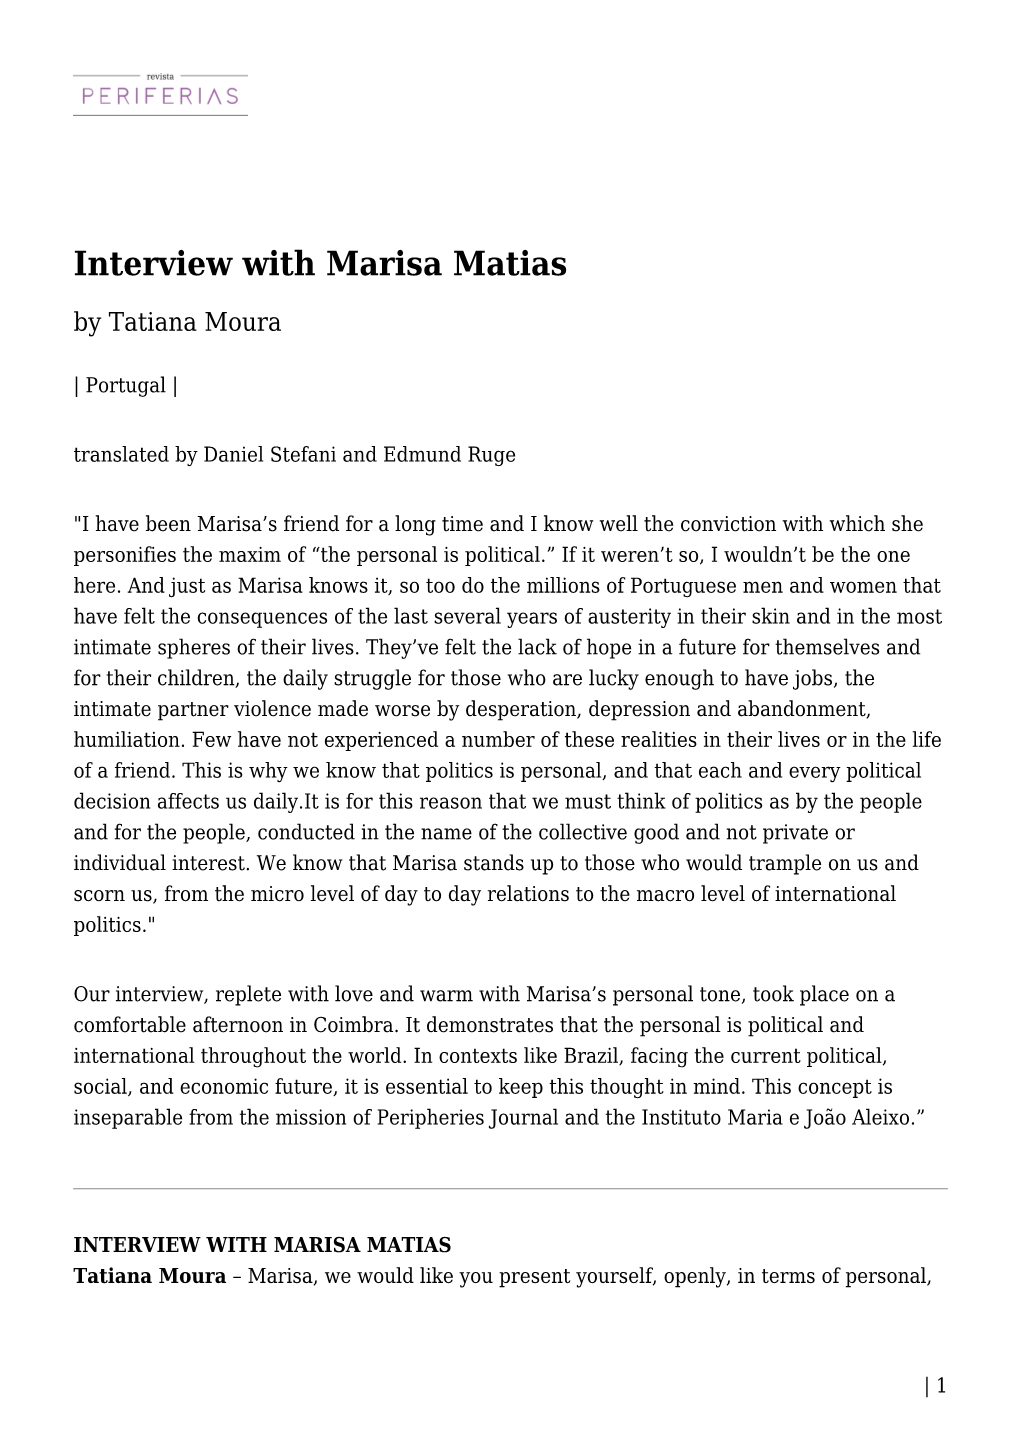 Interview with Marisa Matias by Tatiana Moura